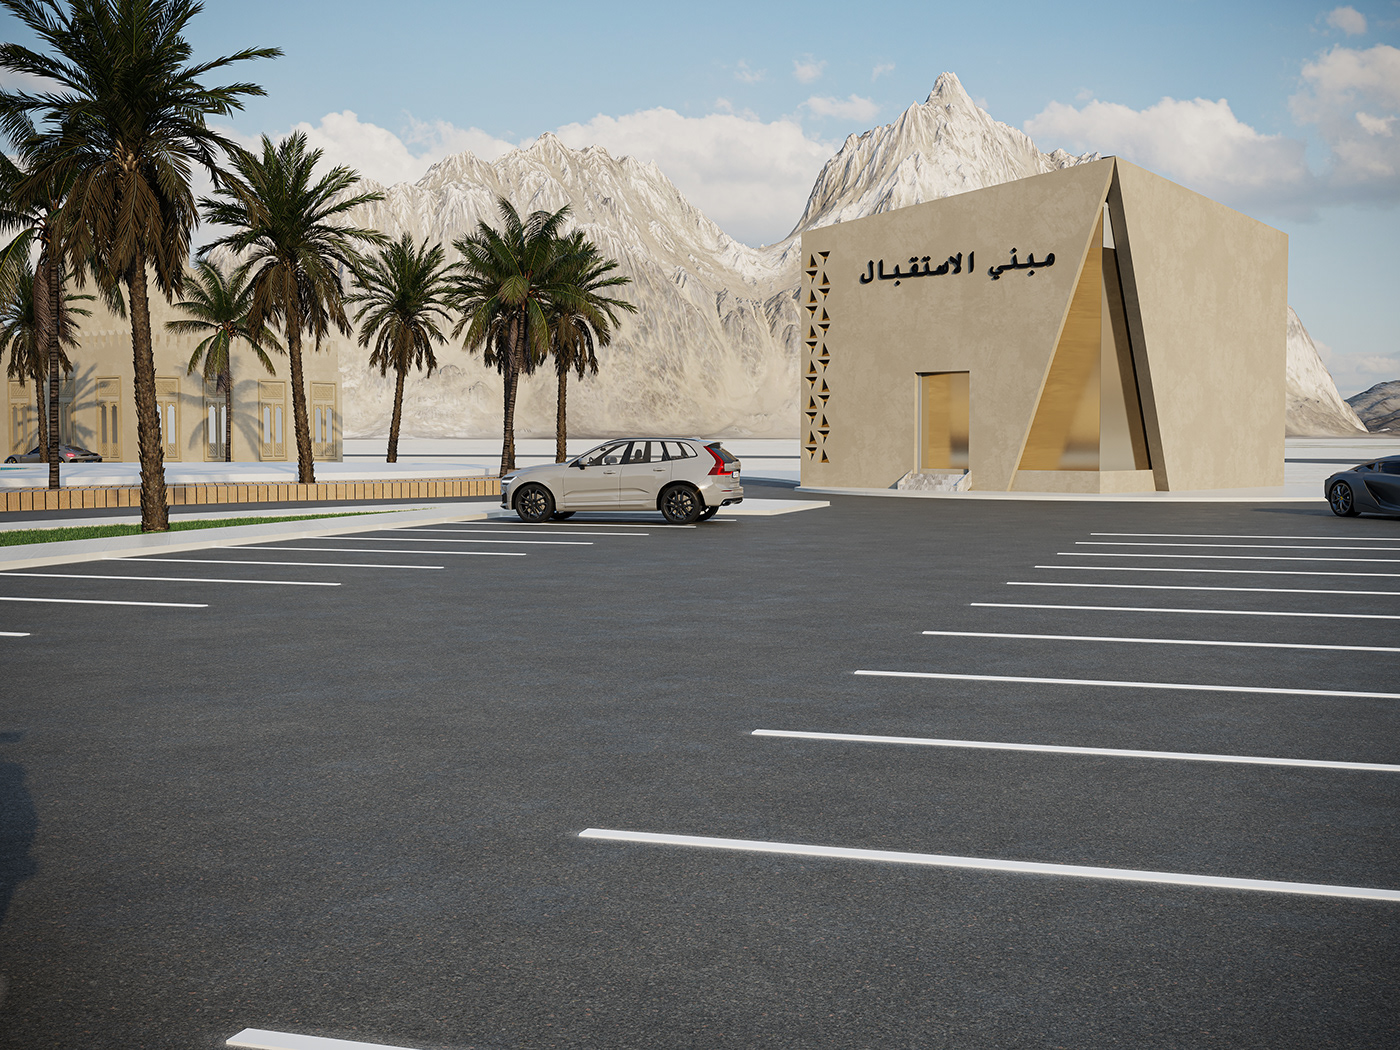 architecture design exterior Saudi Arabia resort tourist resort 3ds max Landscape concept Render